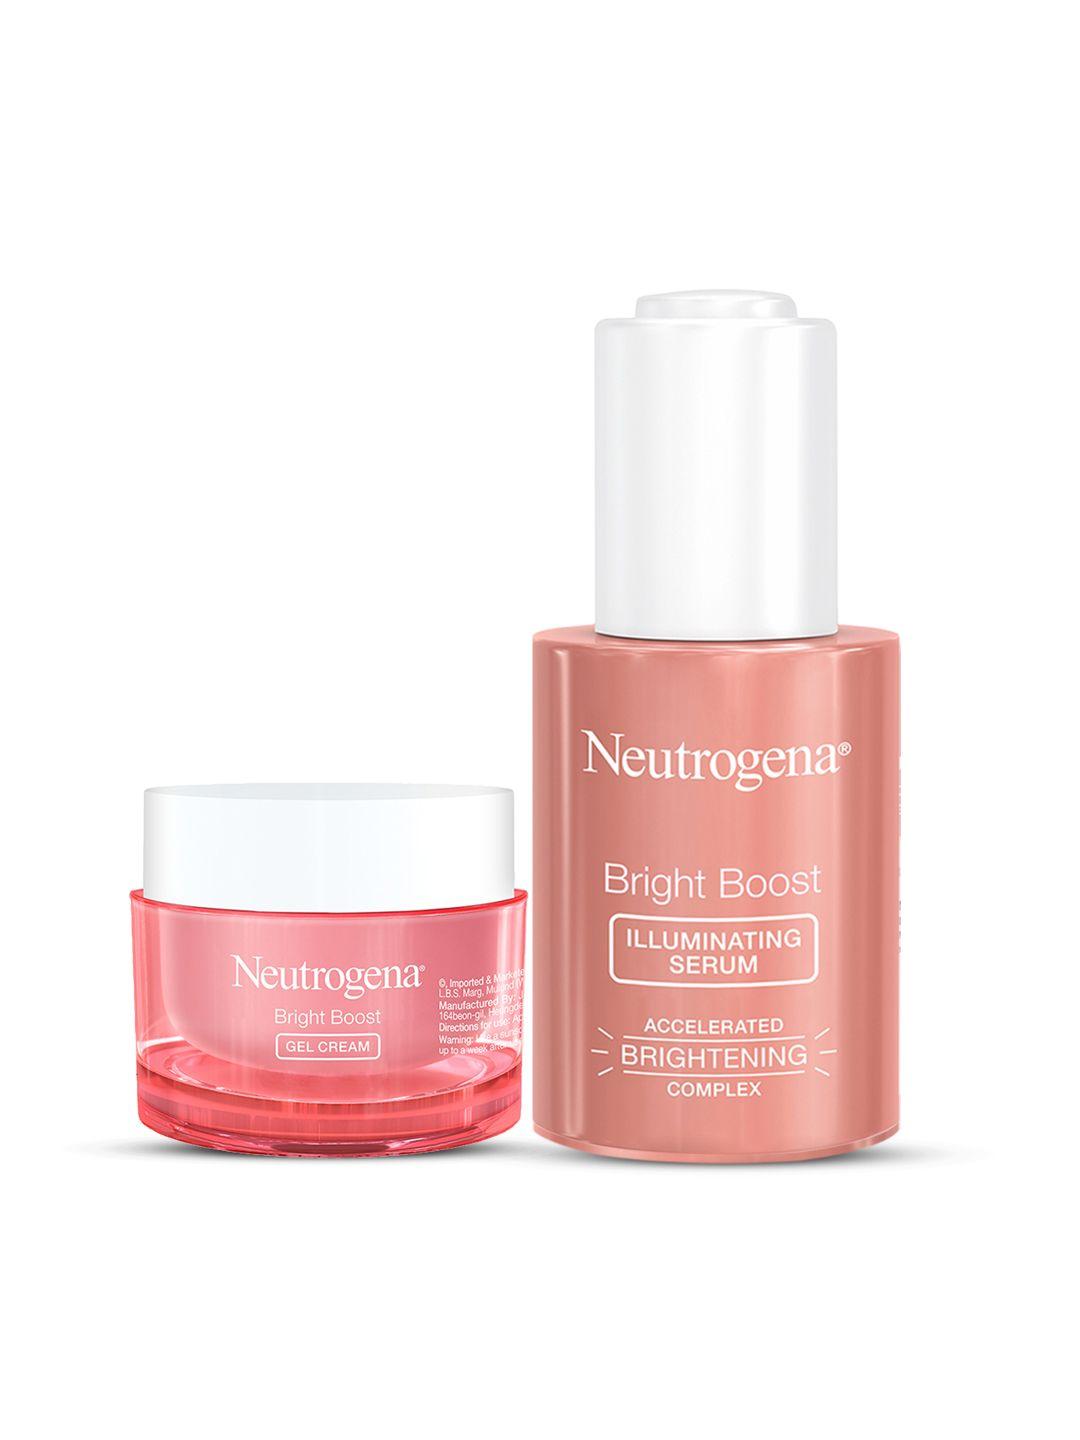 neutrogena set of bright boost gel cream 15g & illuminating serum 30ml